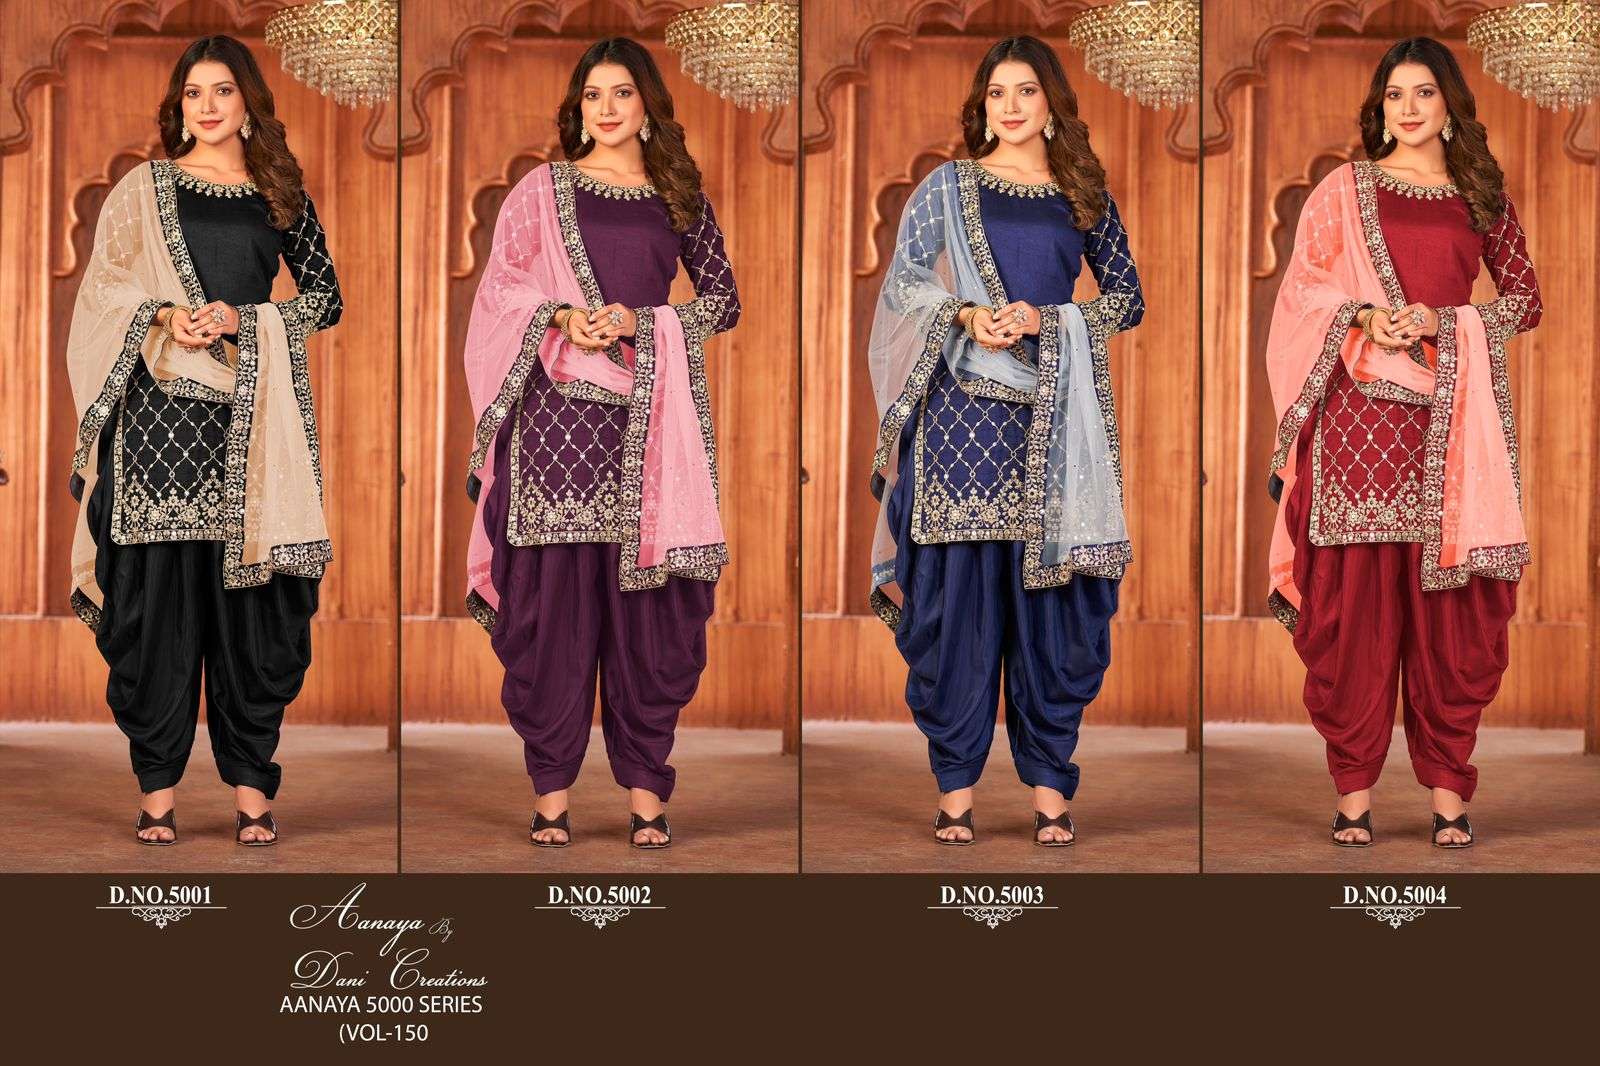 Aanaya Vol-150 By Twisha 5001 To 5004 Series Beautiful Stylish Patiyala Suits Fancy Colorful Casual Wear & Ethnic Wear & Ready To Wear Art Silk Dresses At Wholesale Price